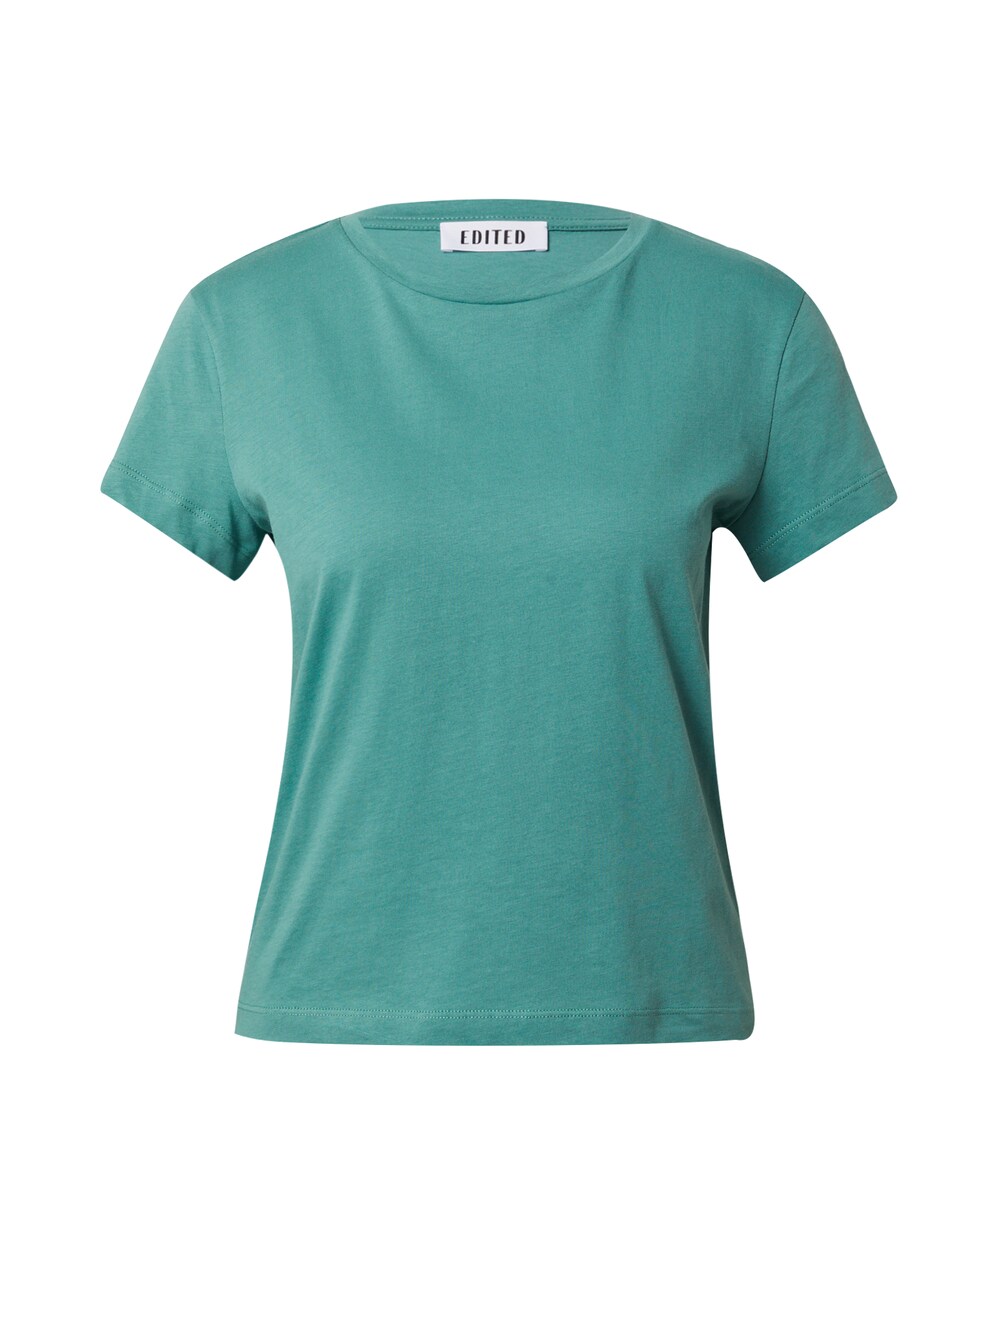 Рубашка EDITED Ester, зеленый рубашка edited ester белый